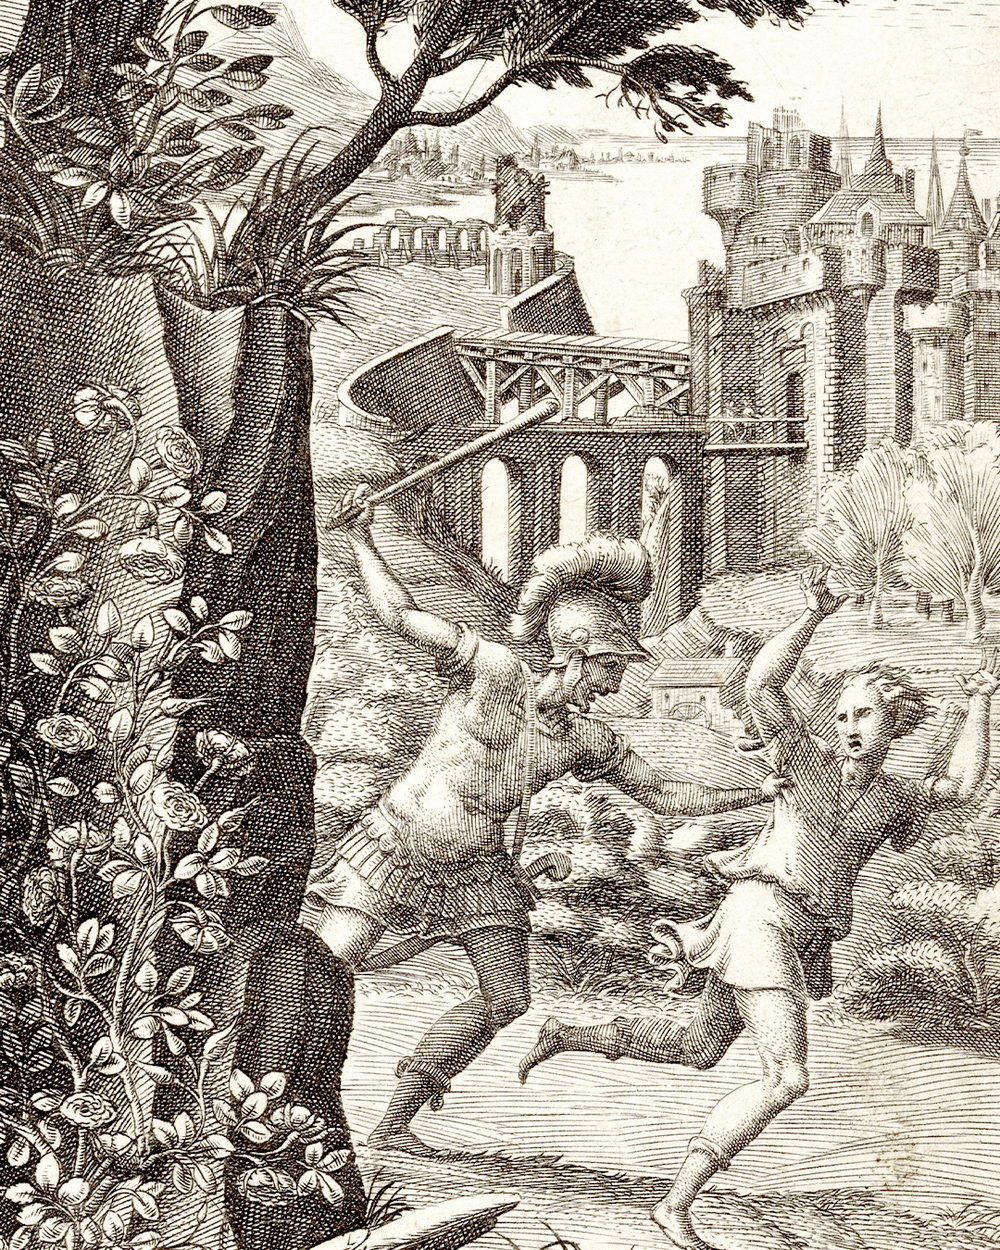 ''Venus and the rose'' (1530 - 1582)